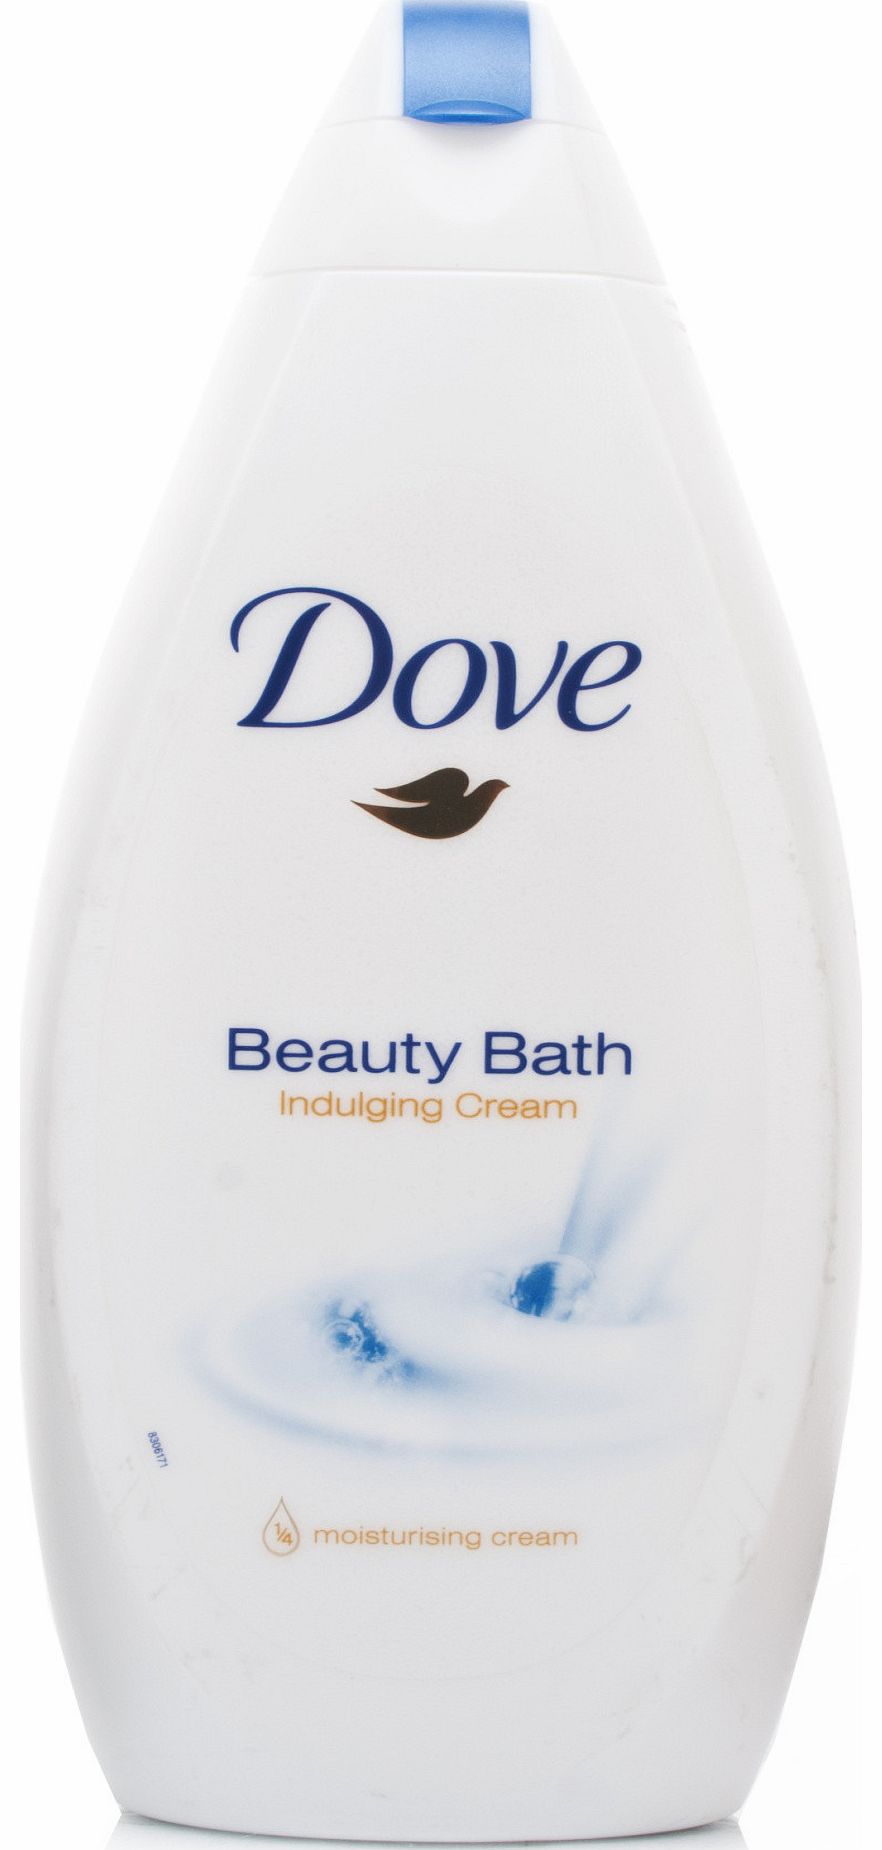 Dove Beauty Bath Indulging Cream